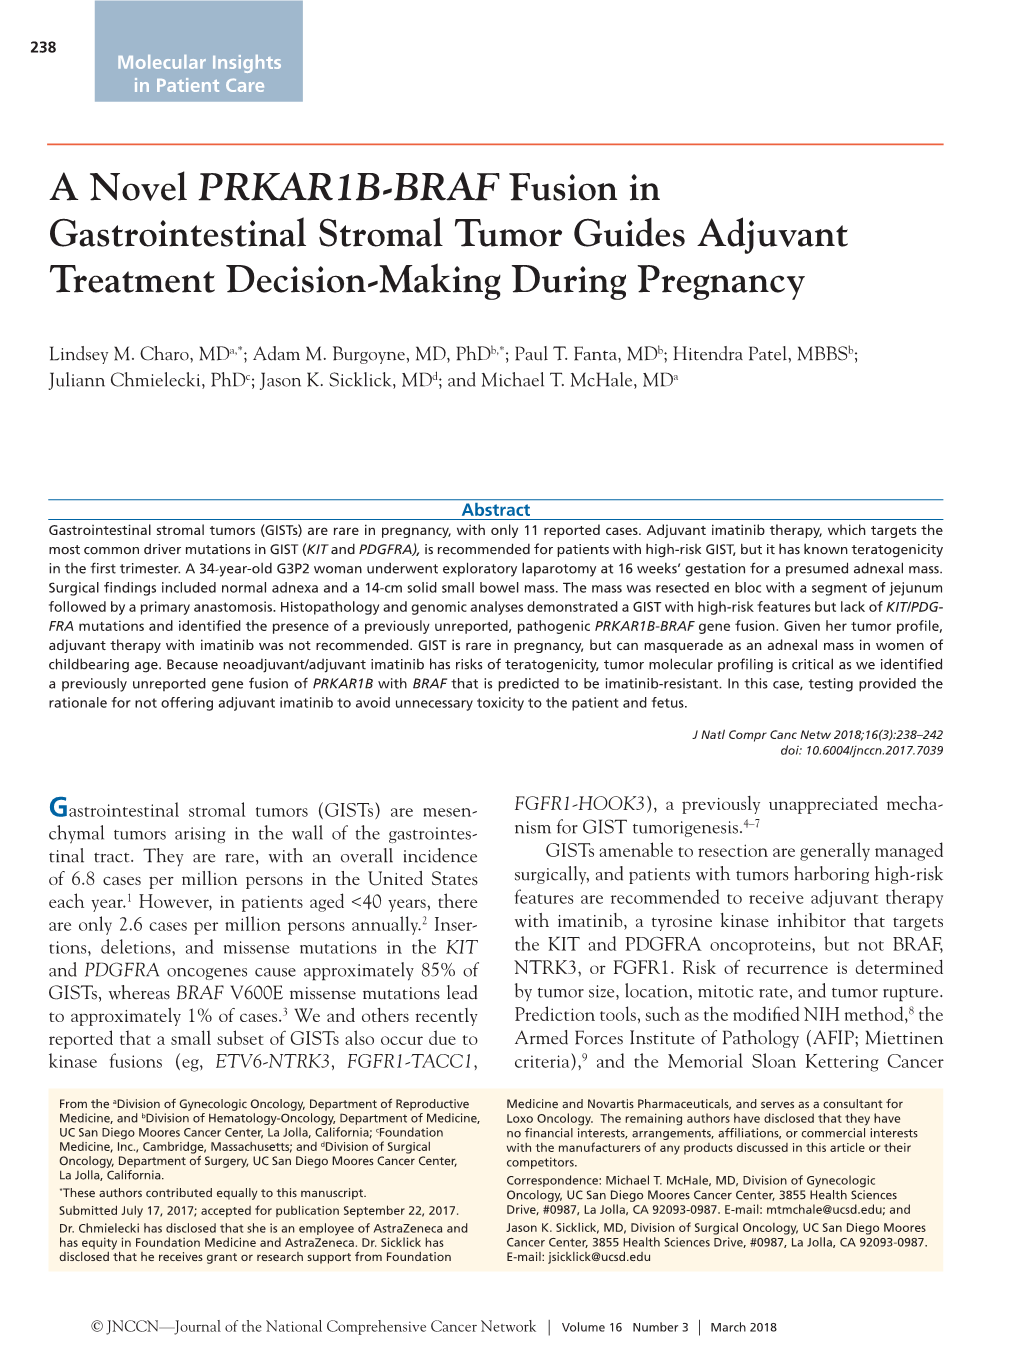 A Novel PRKAR1B-BRAF Fusion in Gastrointestinal Stromal Tumor Guides Adjuvant Treatment Decision-Making During Pregnancy